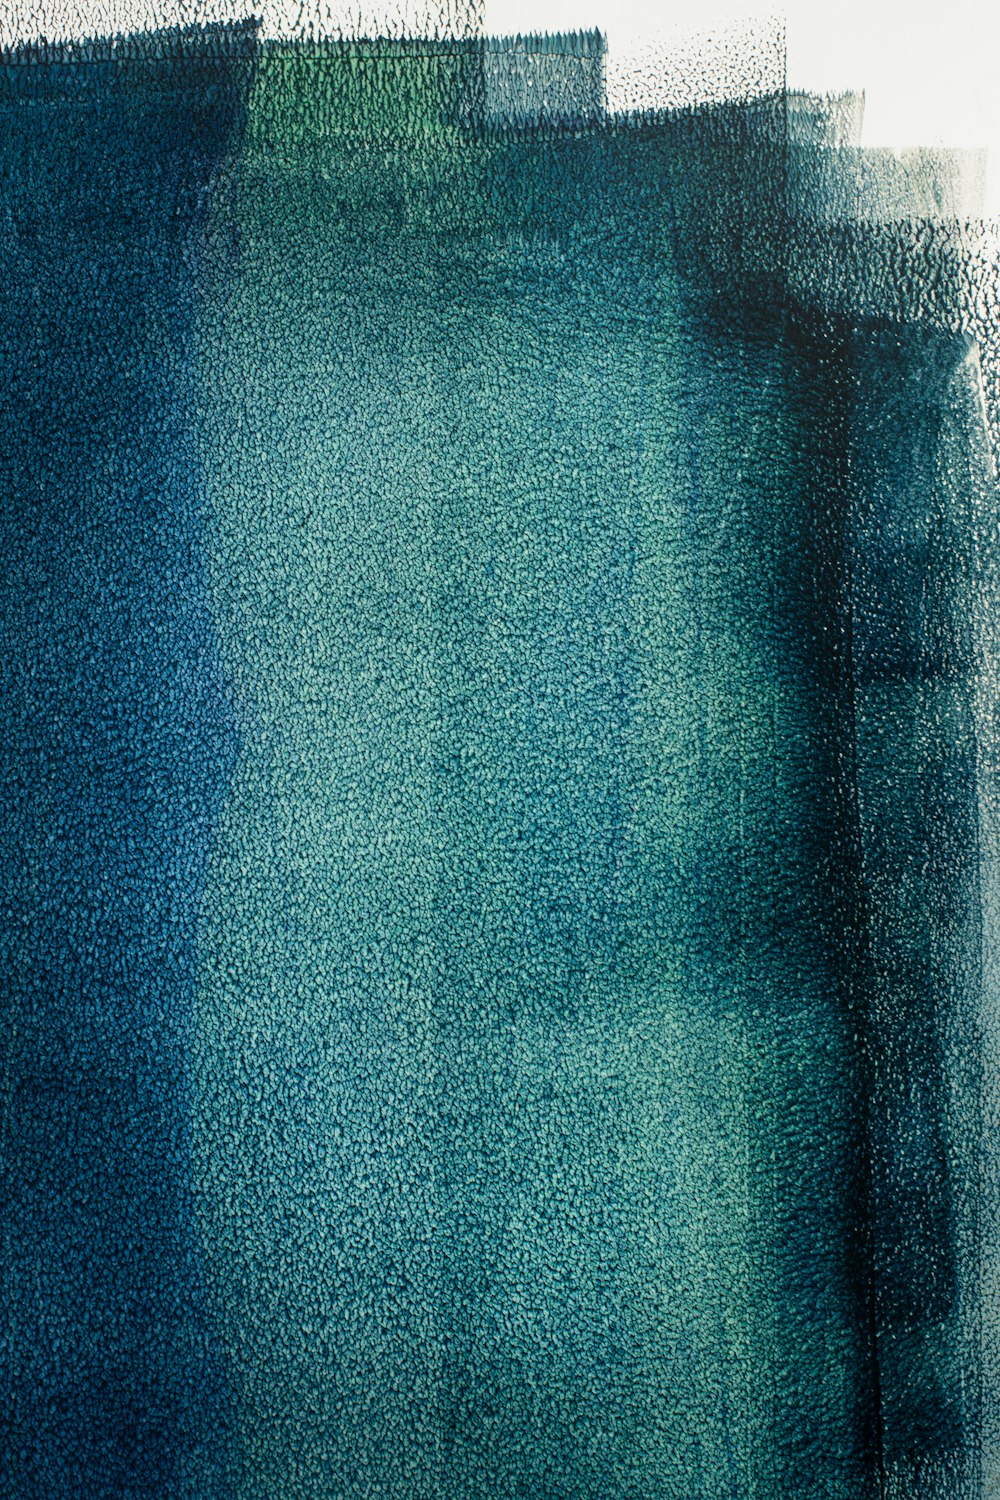 textil azul en primer plano